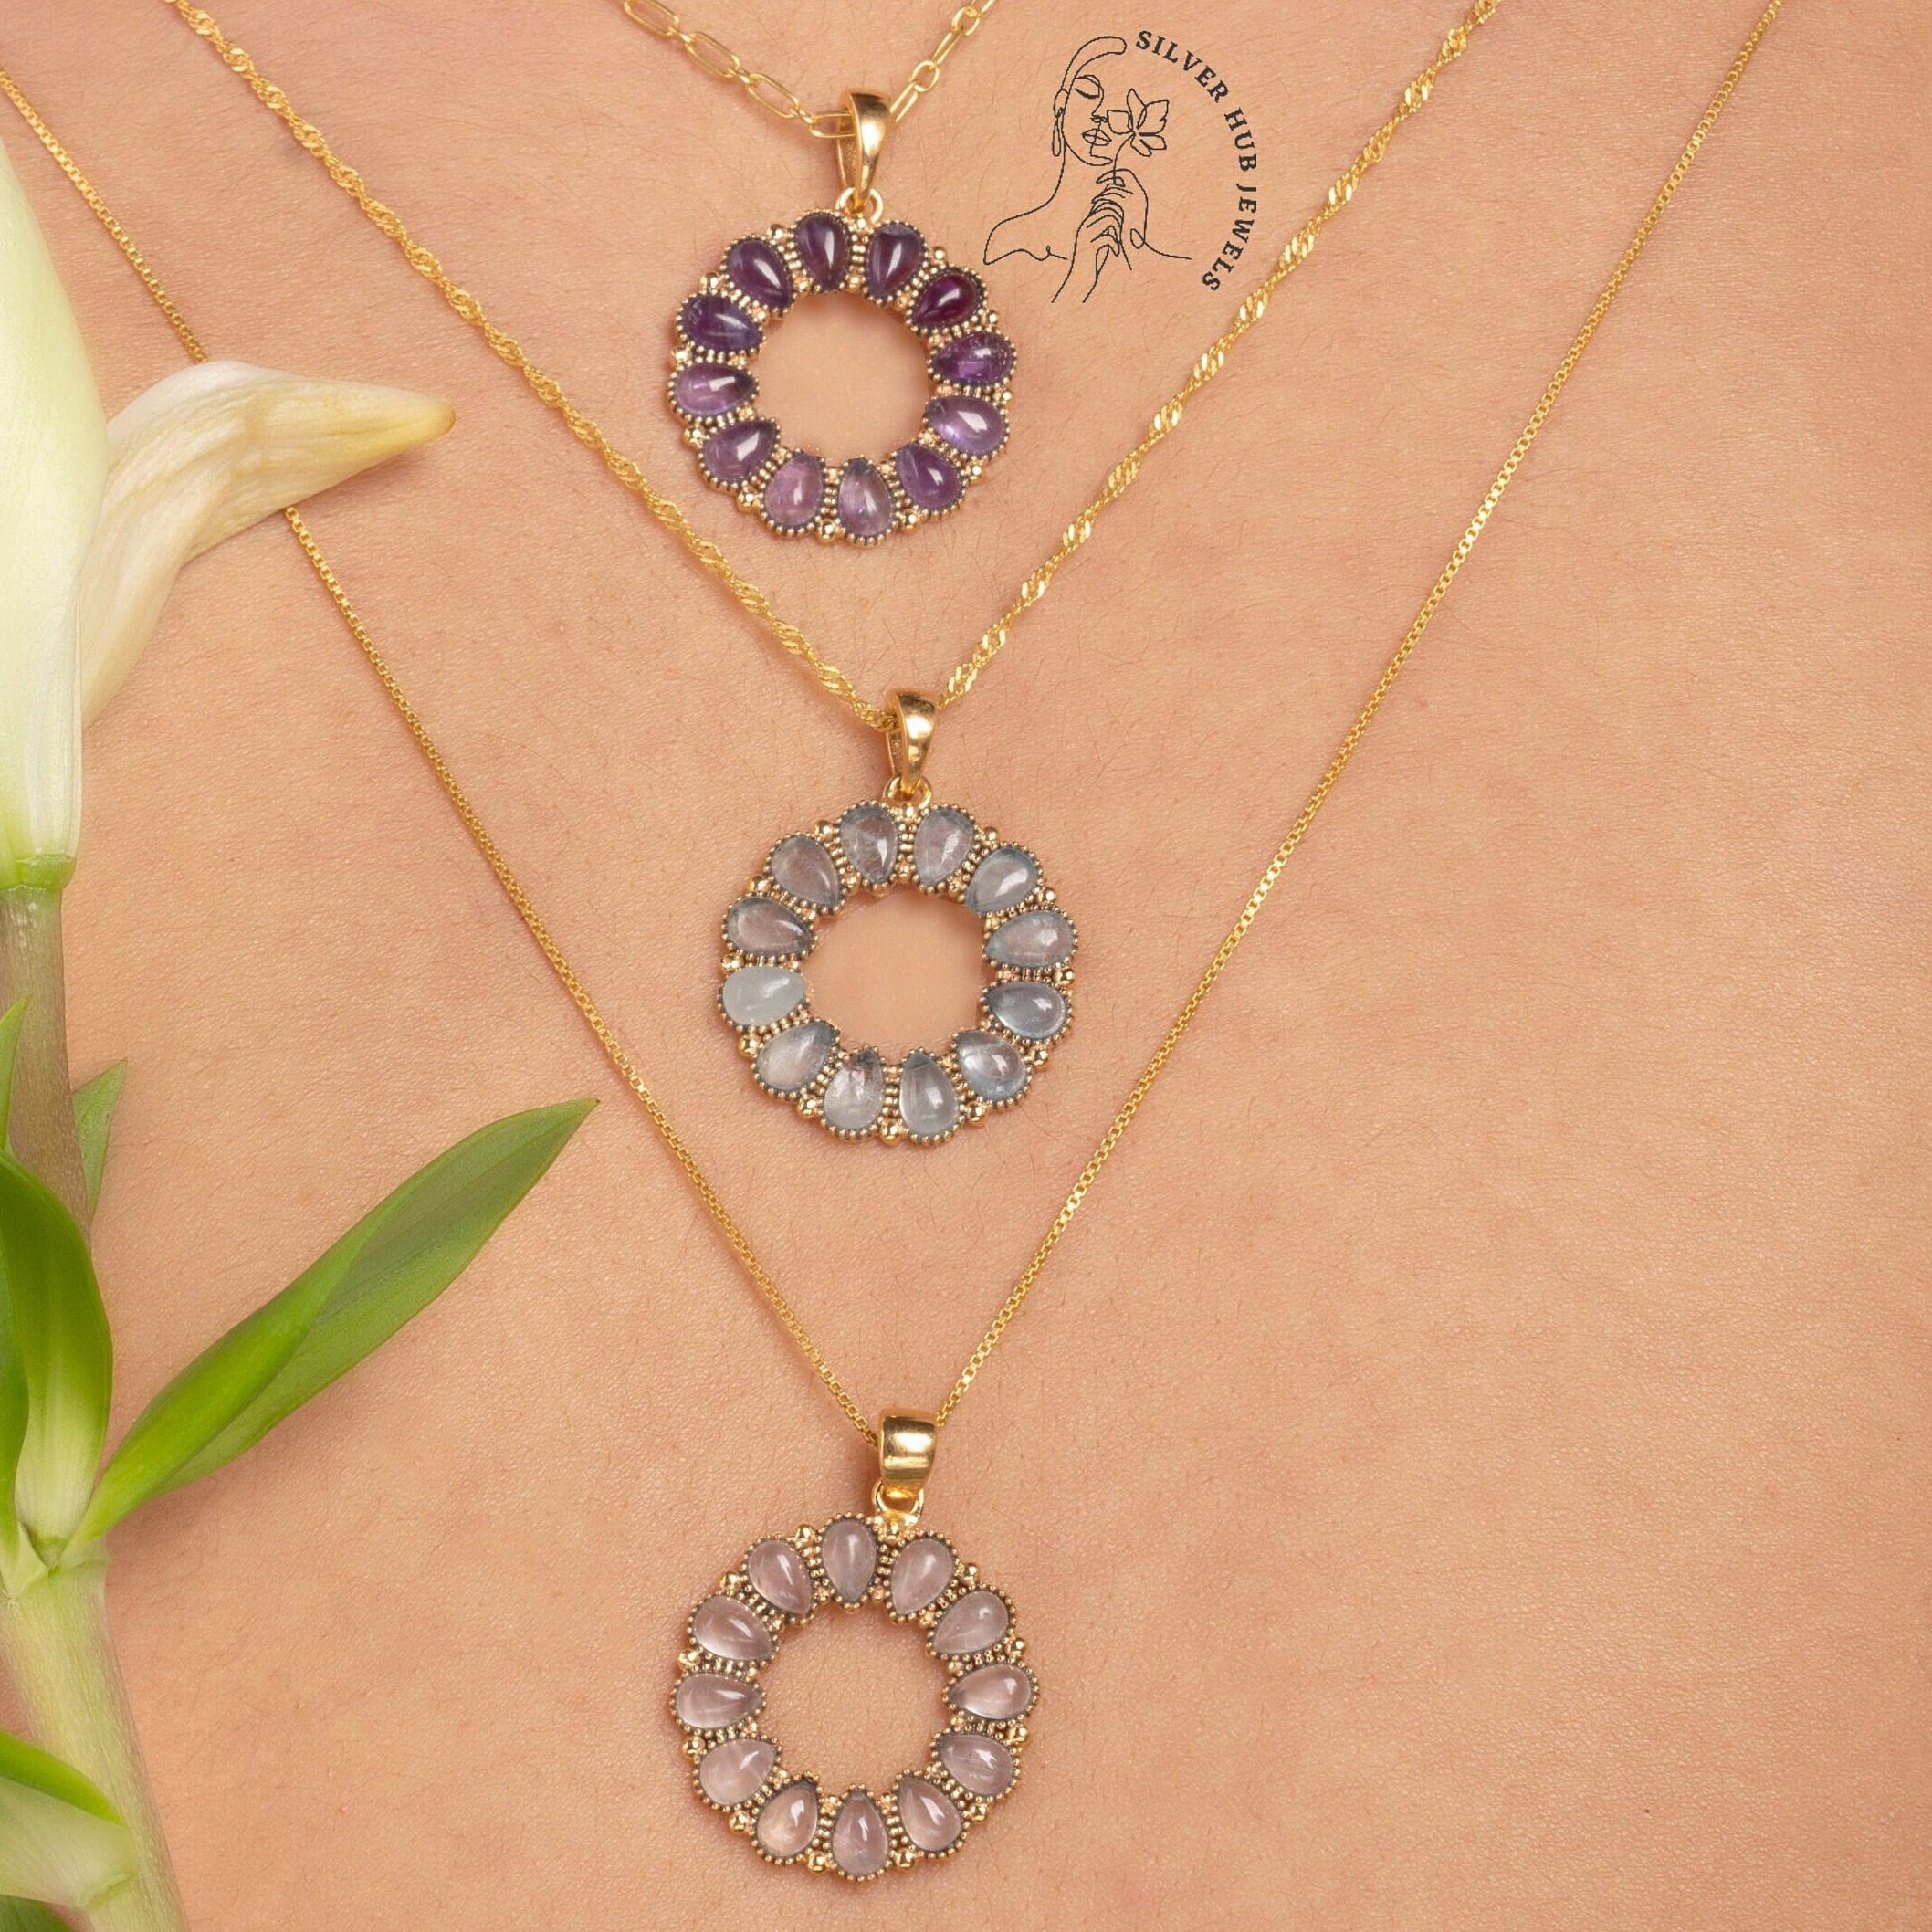 Gemstone Necklace, Bridesmaid Necklace, Crystal Necklace, 925 Sterling Silver Necklace, Unique Jewelry